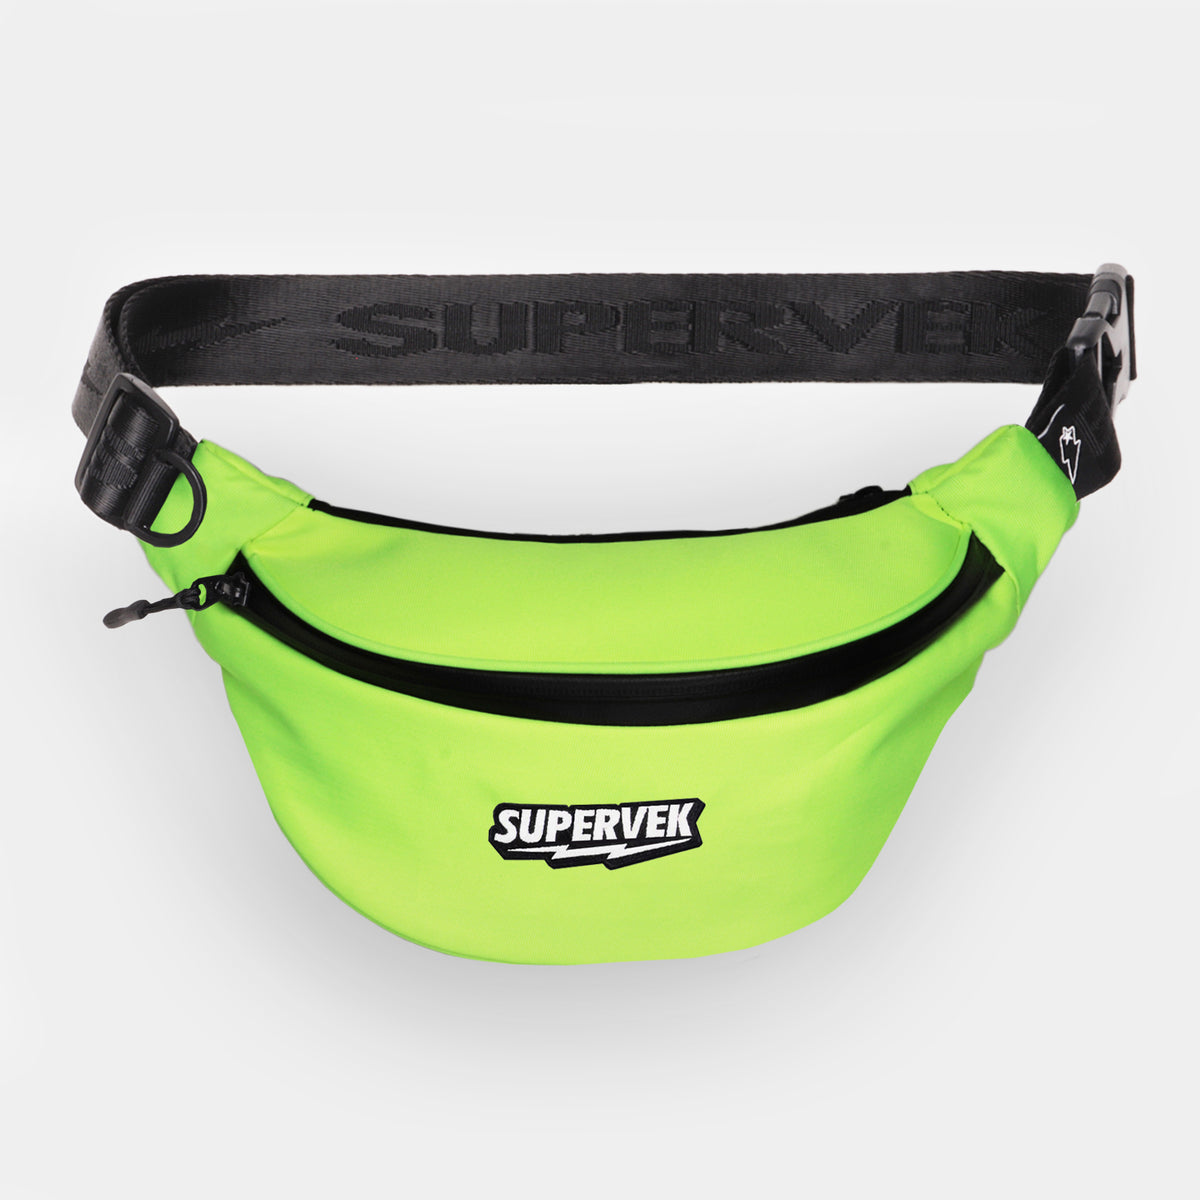 Supervek Crossbody Slinger - Vetric Lime - Urban Functional Fanny Hip Bag for Everyday Essentials